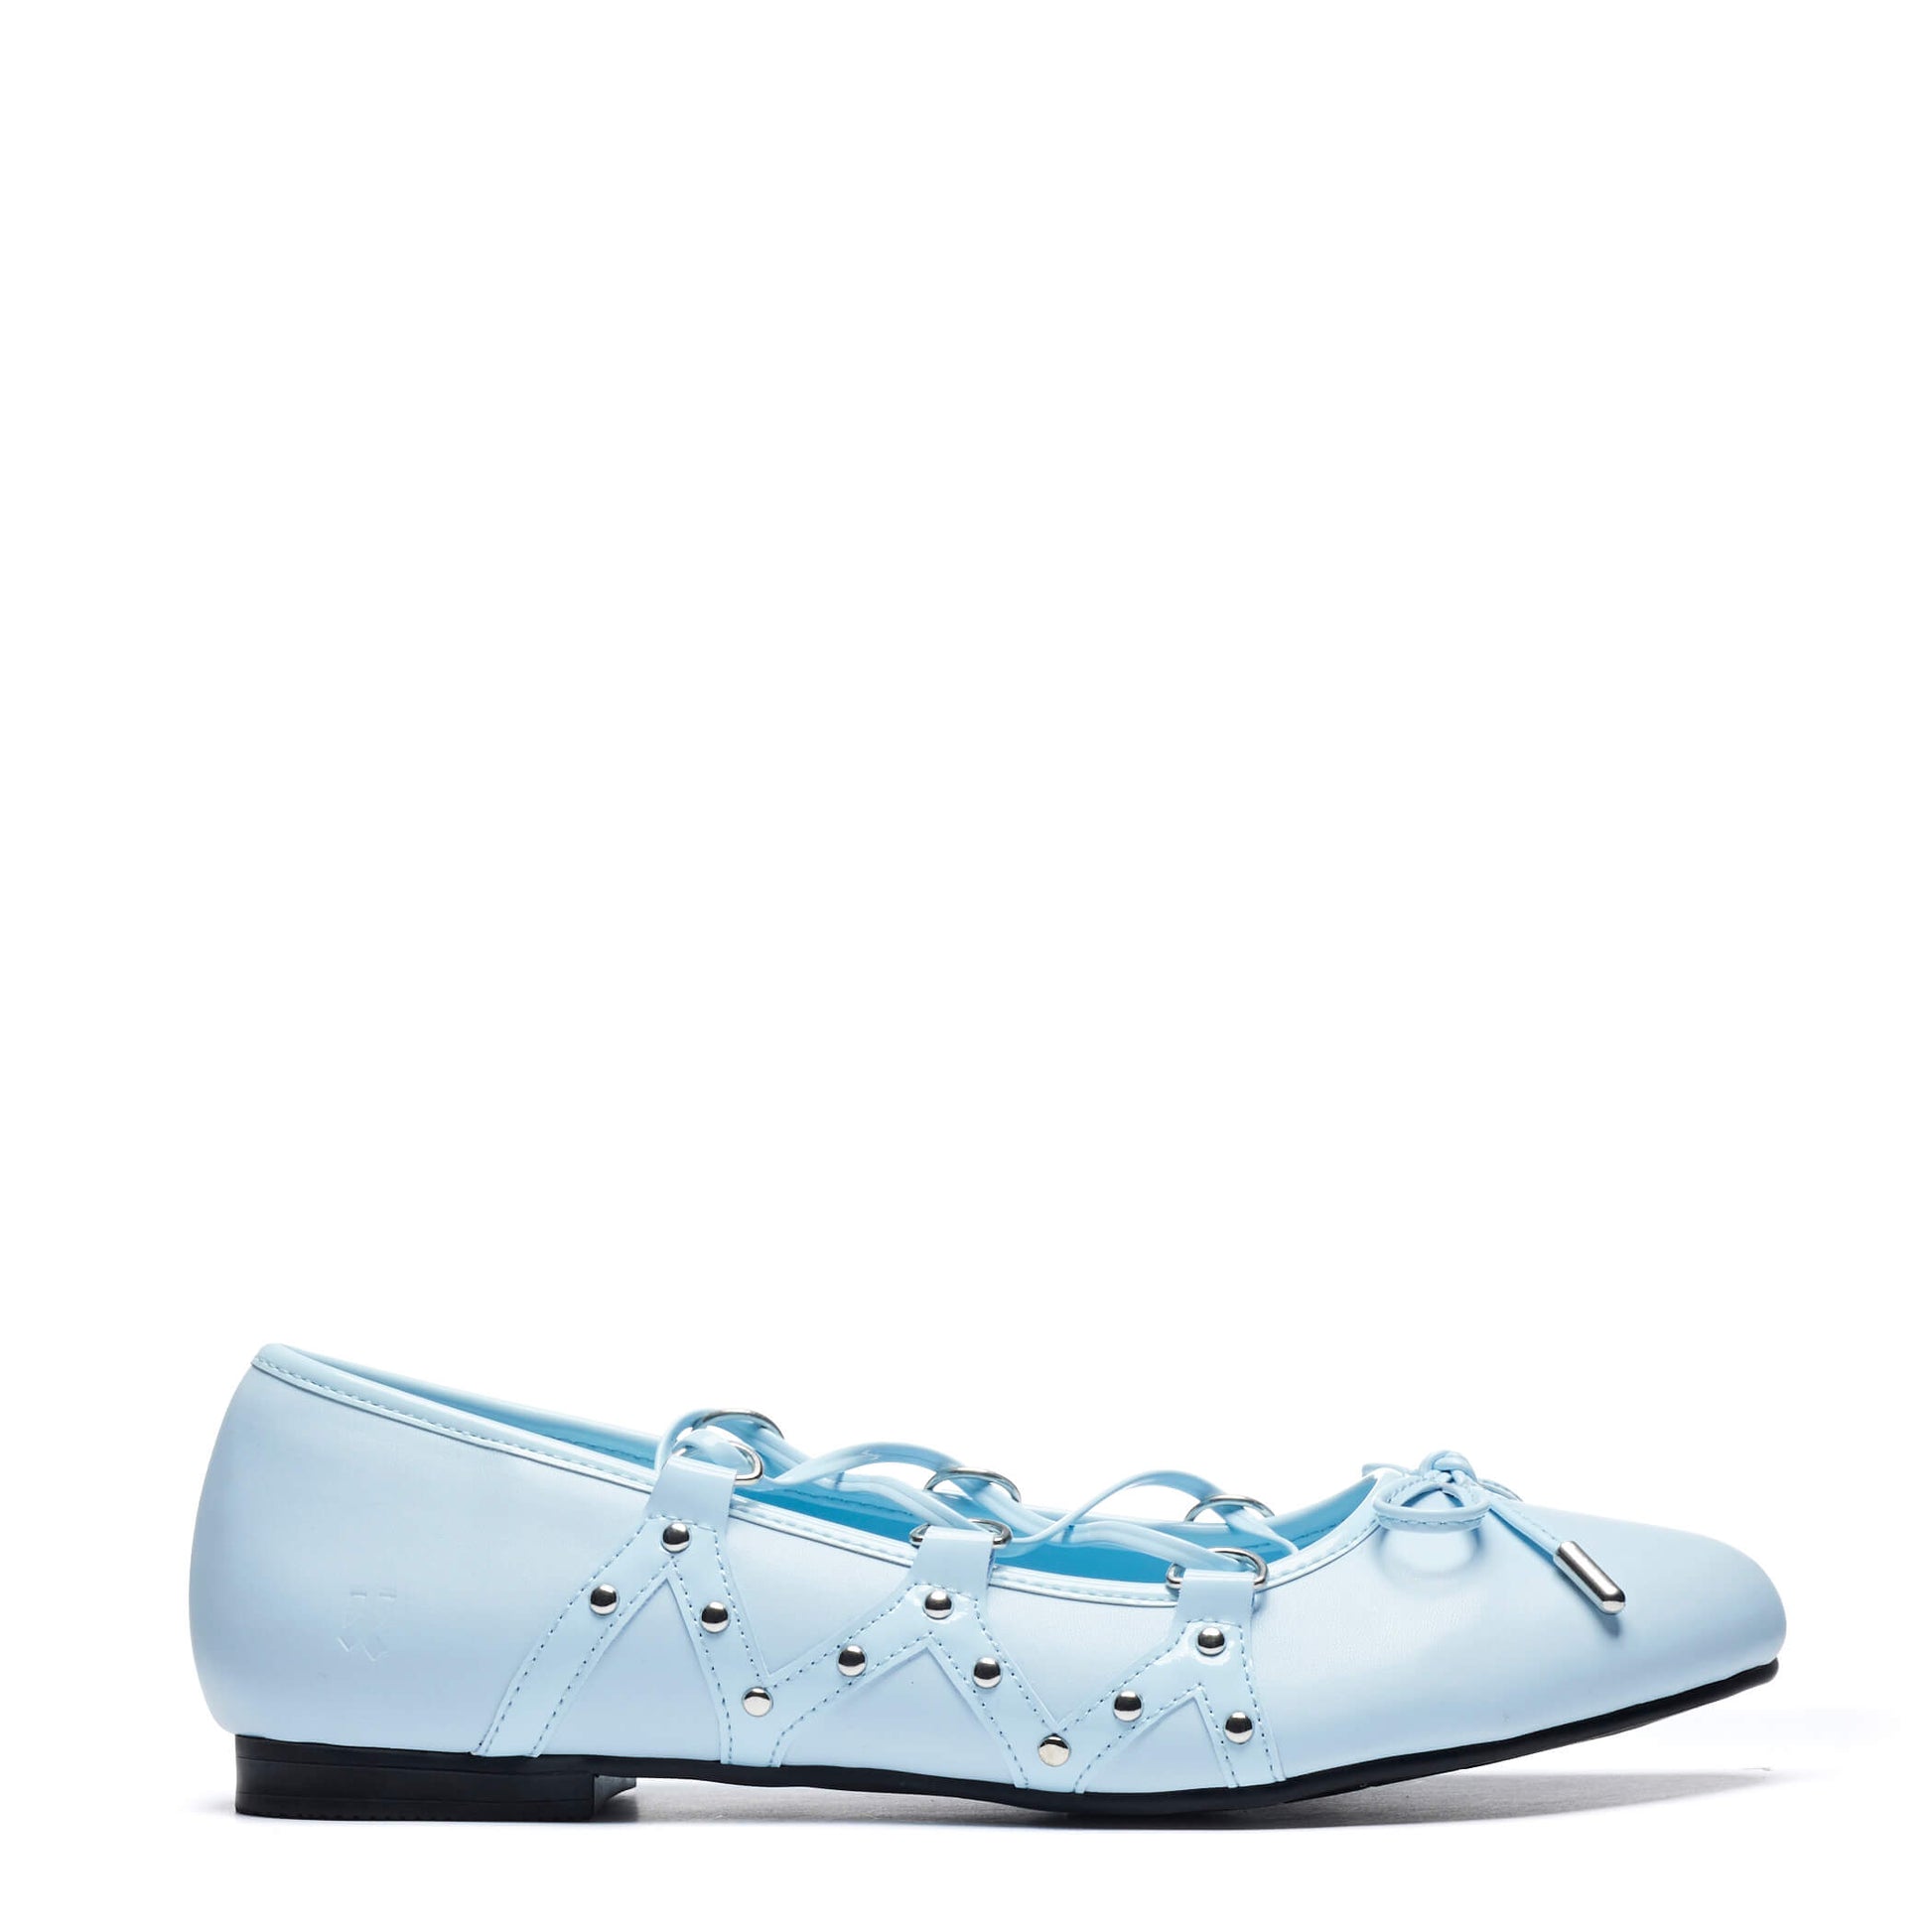 Violetta Lace Up Flat Ballet Shoes - Blue - Koi Footwear - Side View